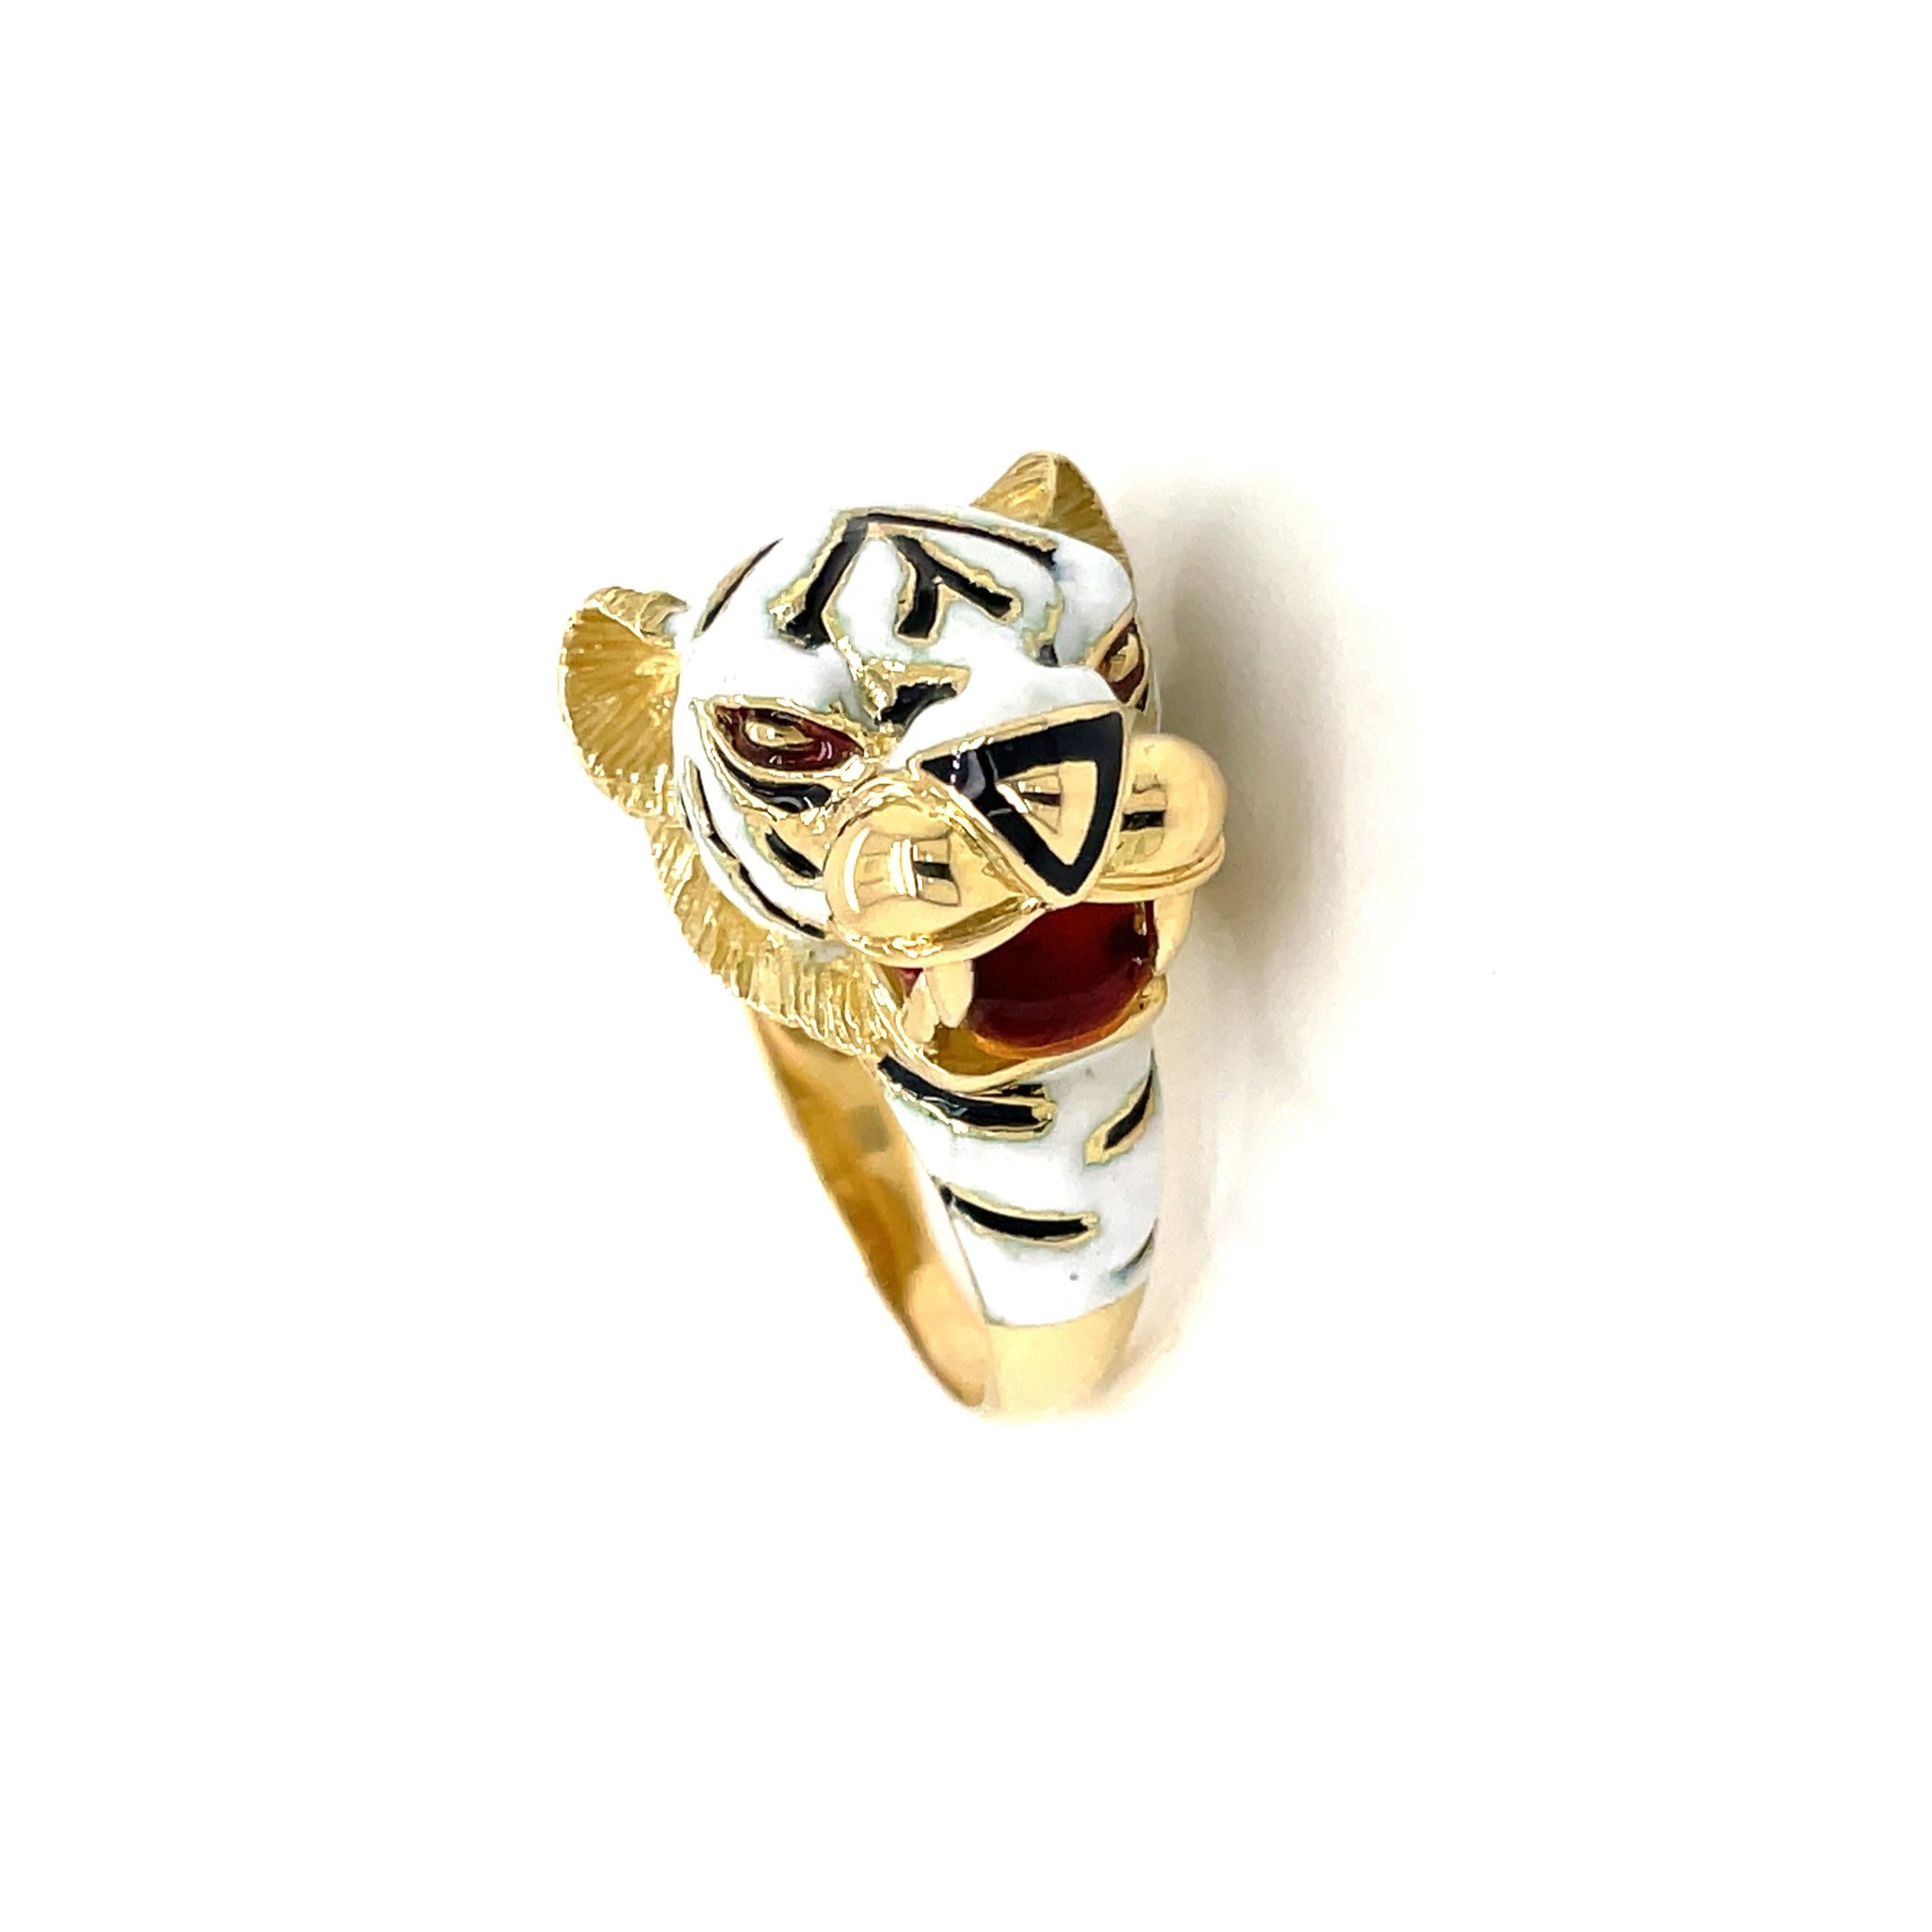 Frascarolo Italy Enamel Gold Tiger Ring 1